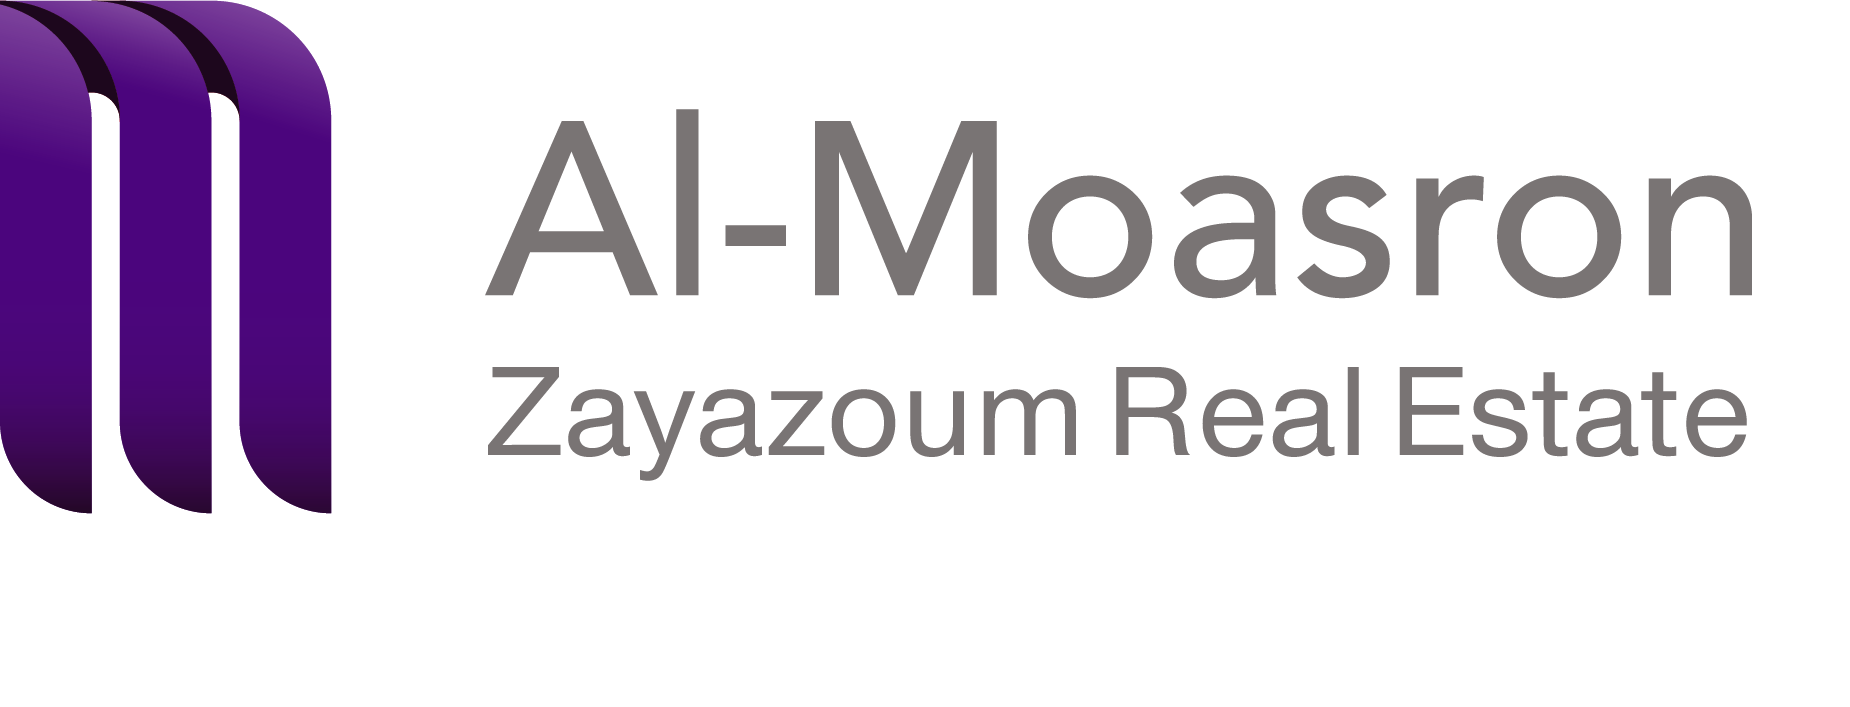 Zayazoum Real Estate